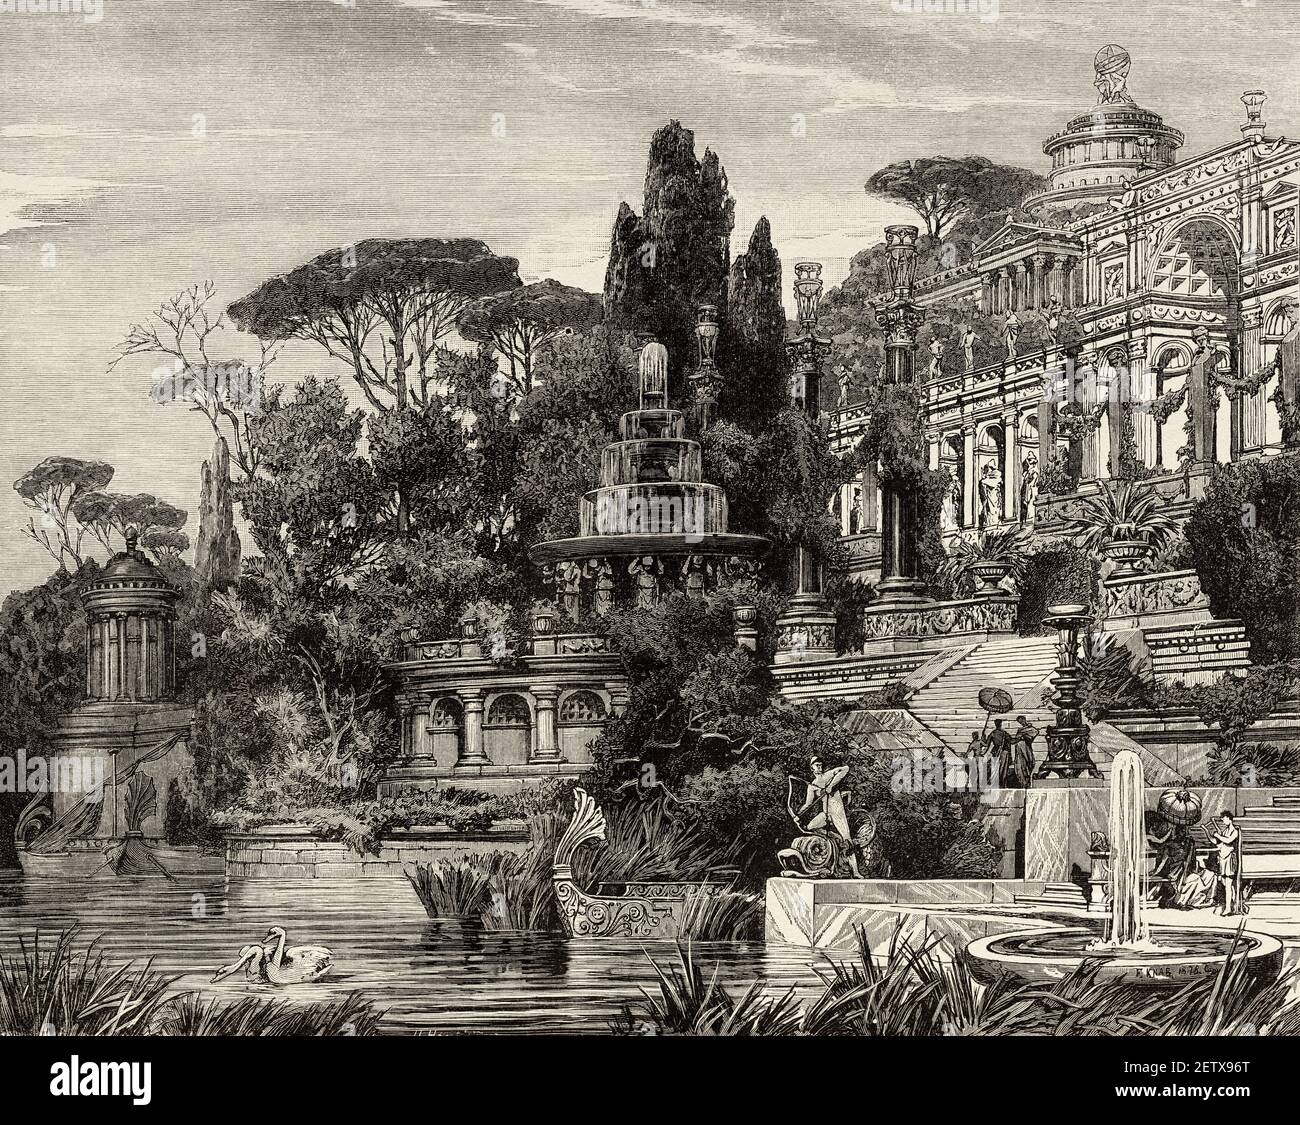 Traditionelle Römische Villa, Altes Rom, Italien. Europa. Alte 19th Jahrhundert gravierte Illustration, El Mundo Ilustrado 1881 Stockfoto